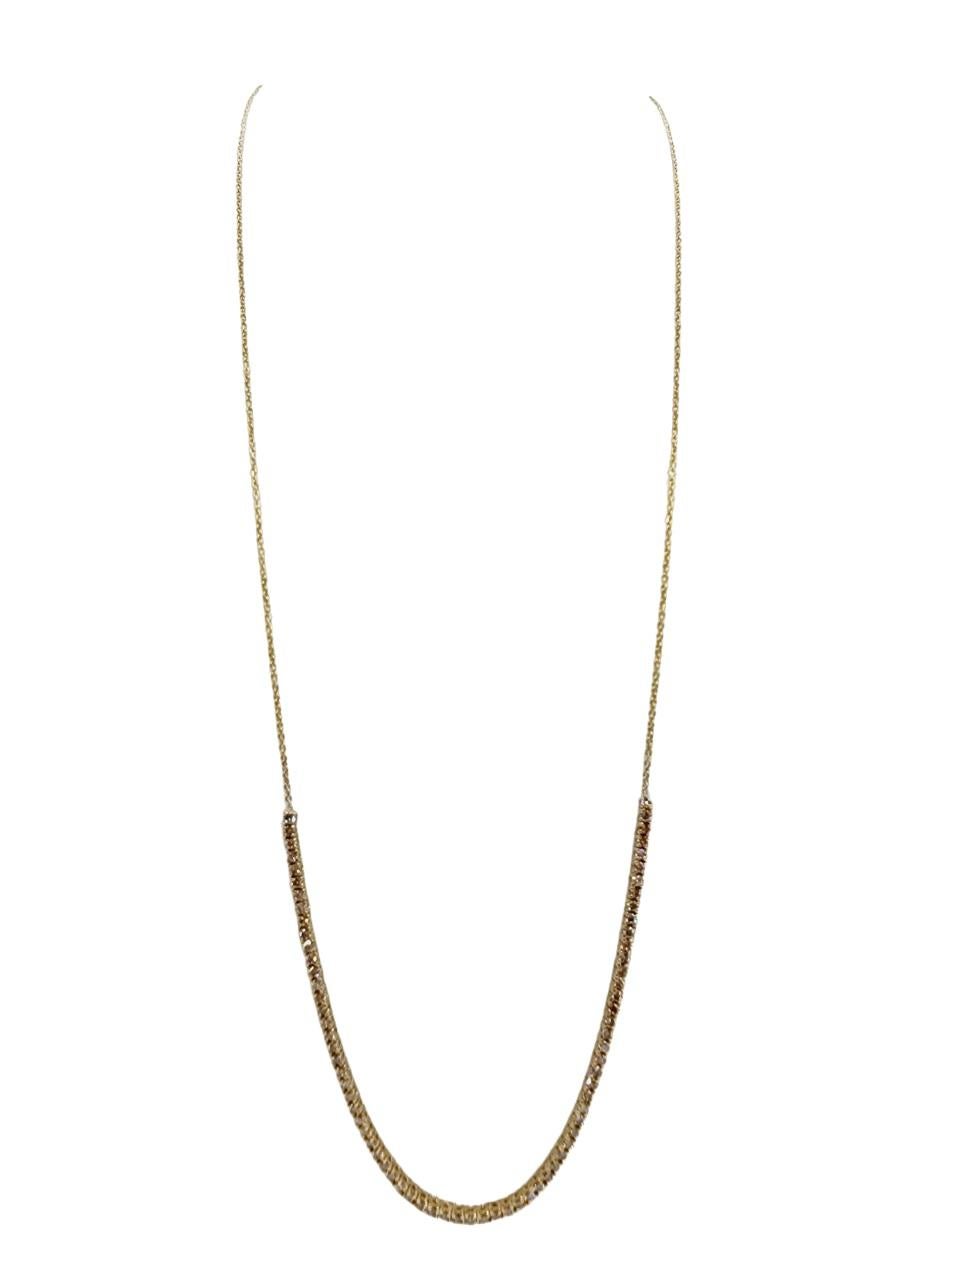 1.65 Carat Mini Diamond Necklace Chain 14 Karat Yellow Gold  23